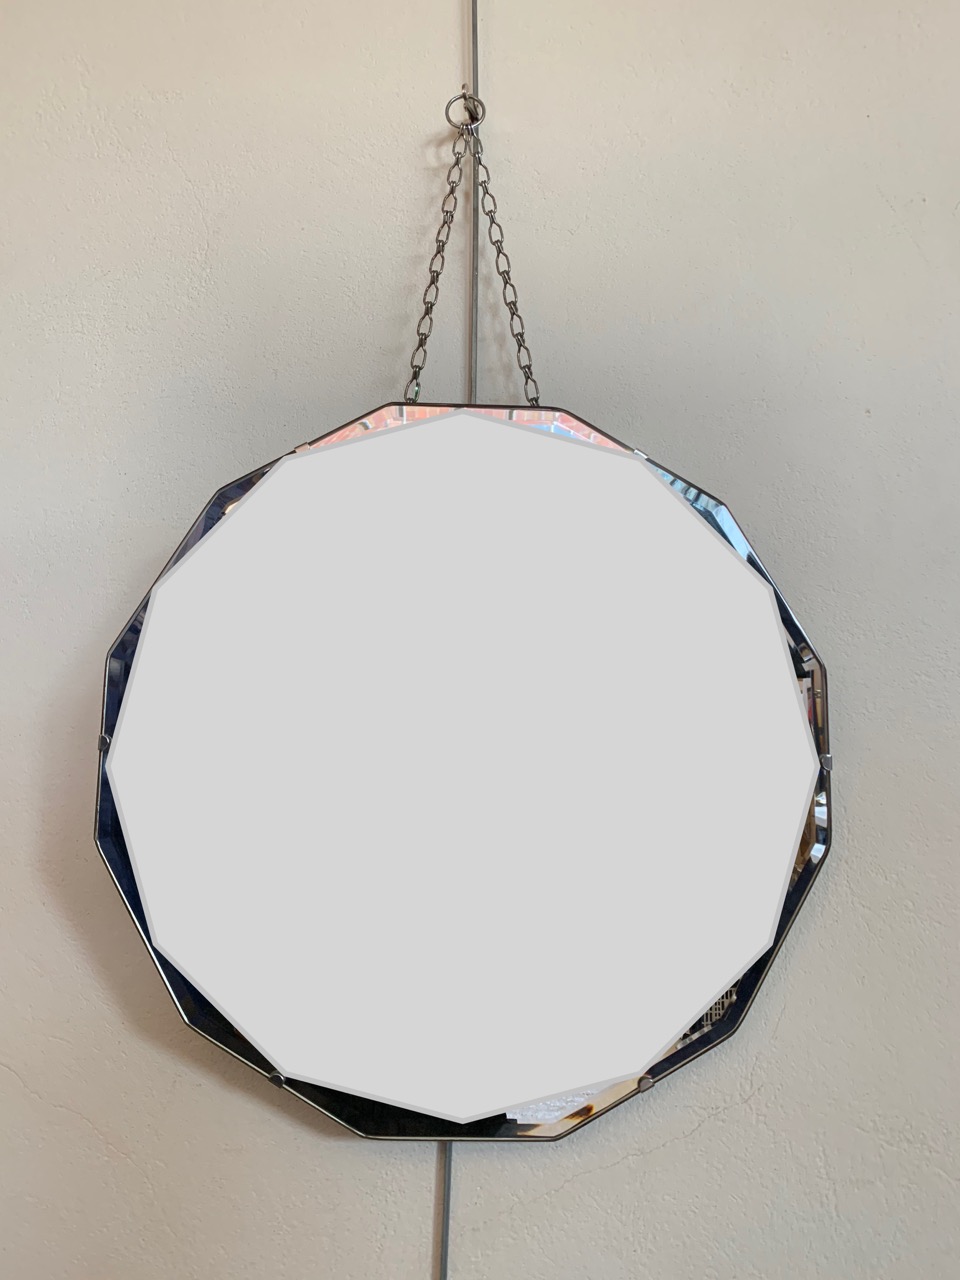 A bevel edged polygonal wall mirror circa 1930s - 1950s, 46 cm diameter